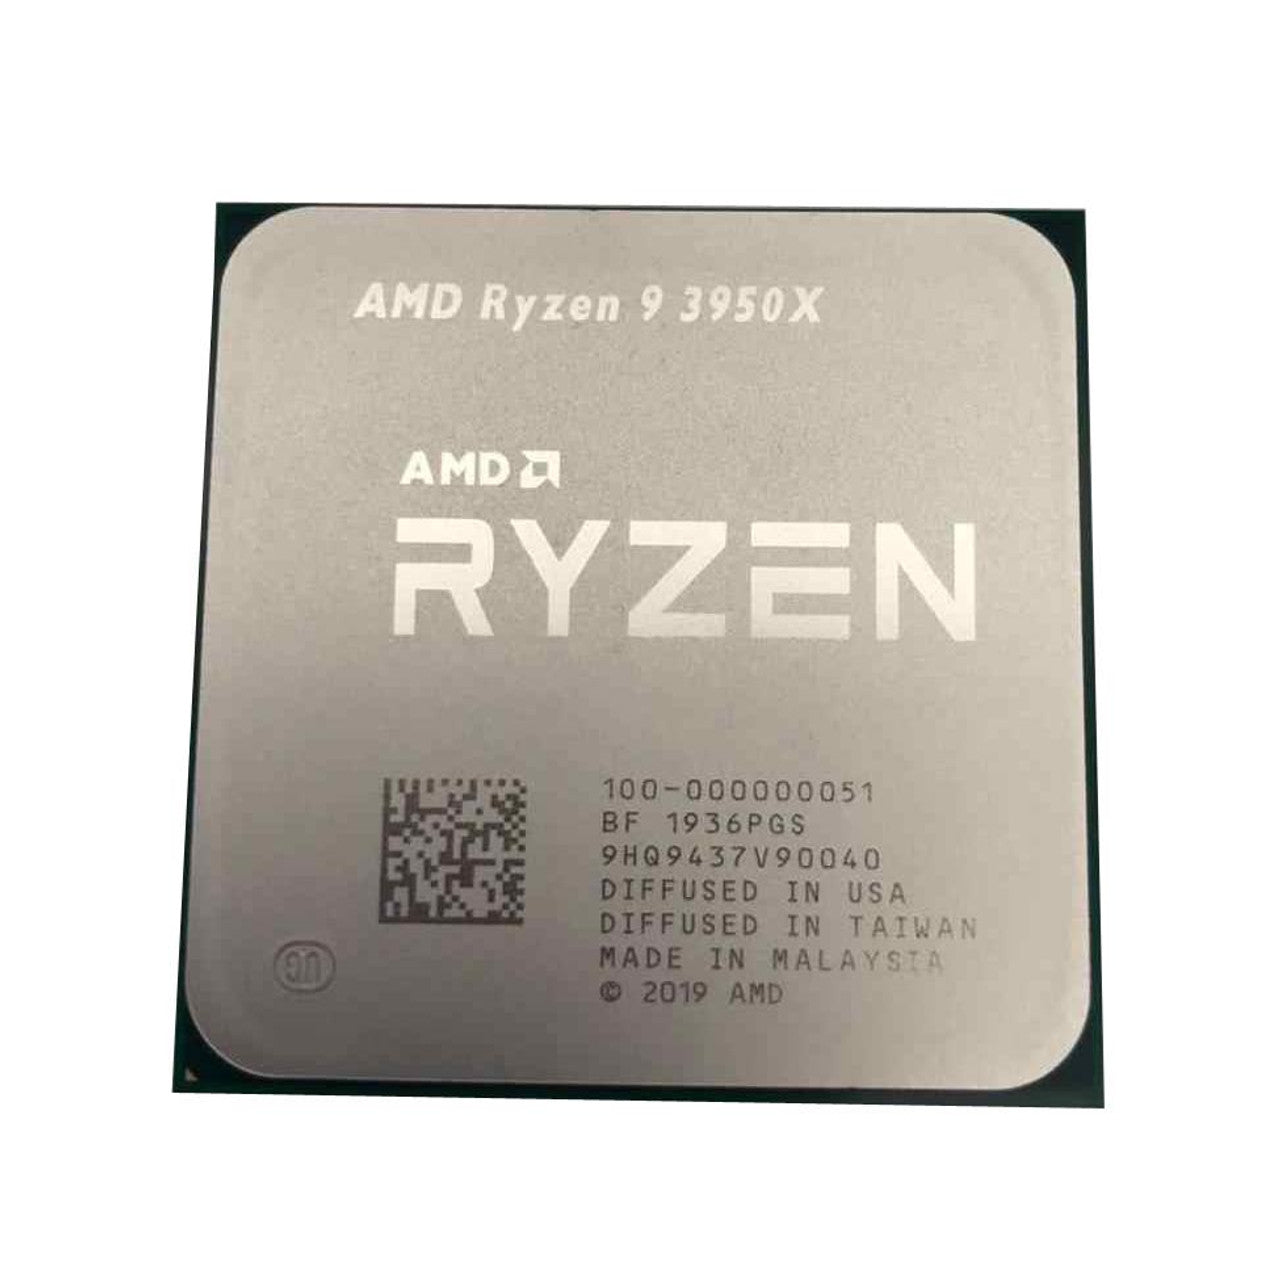 AMD Ryzen 9 3950X 16-Core 64MB L3 Socket AM4 Processor - 100-000000051E Used